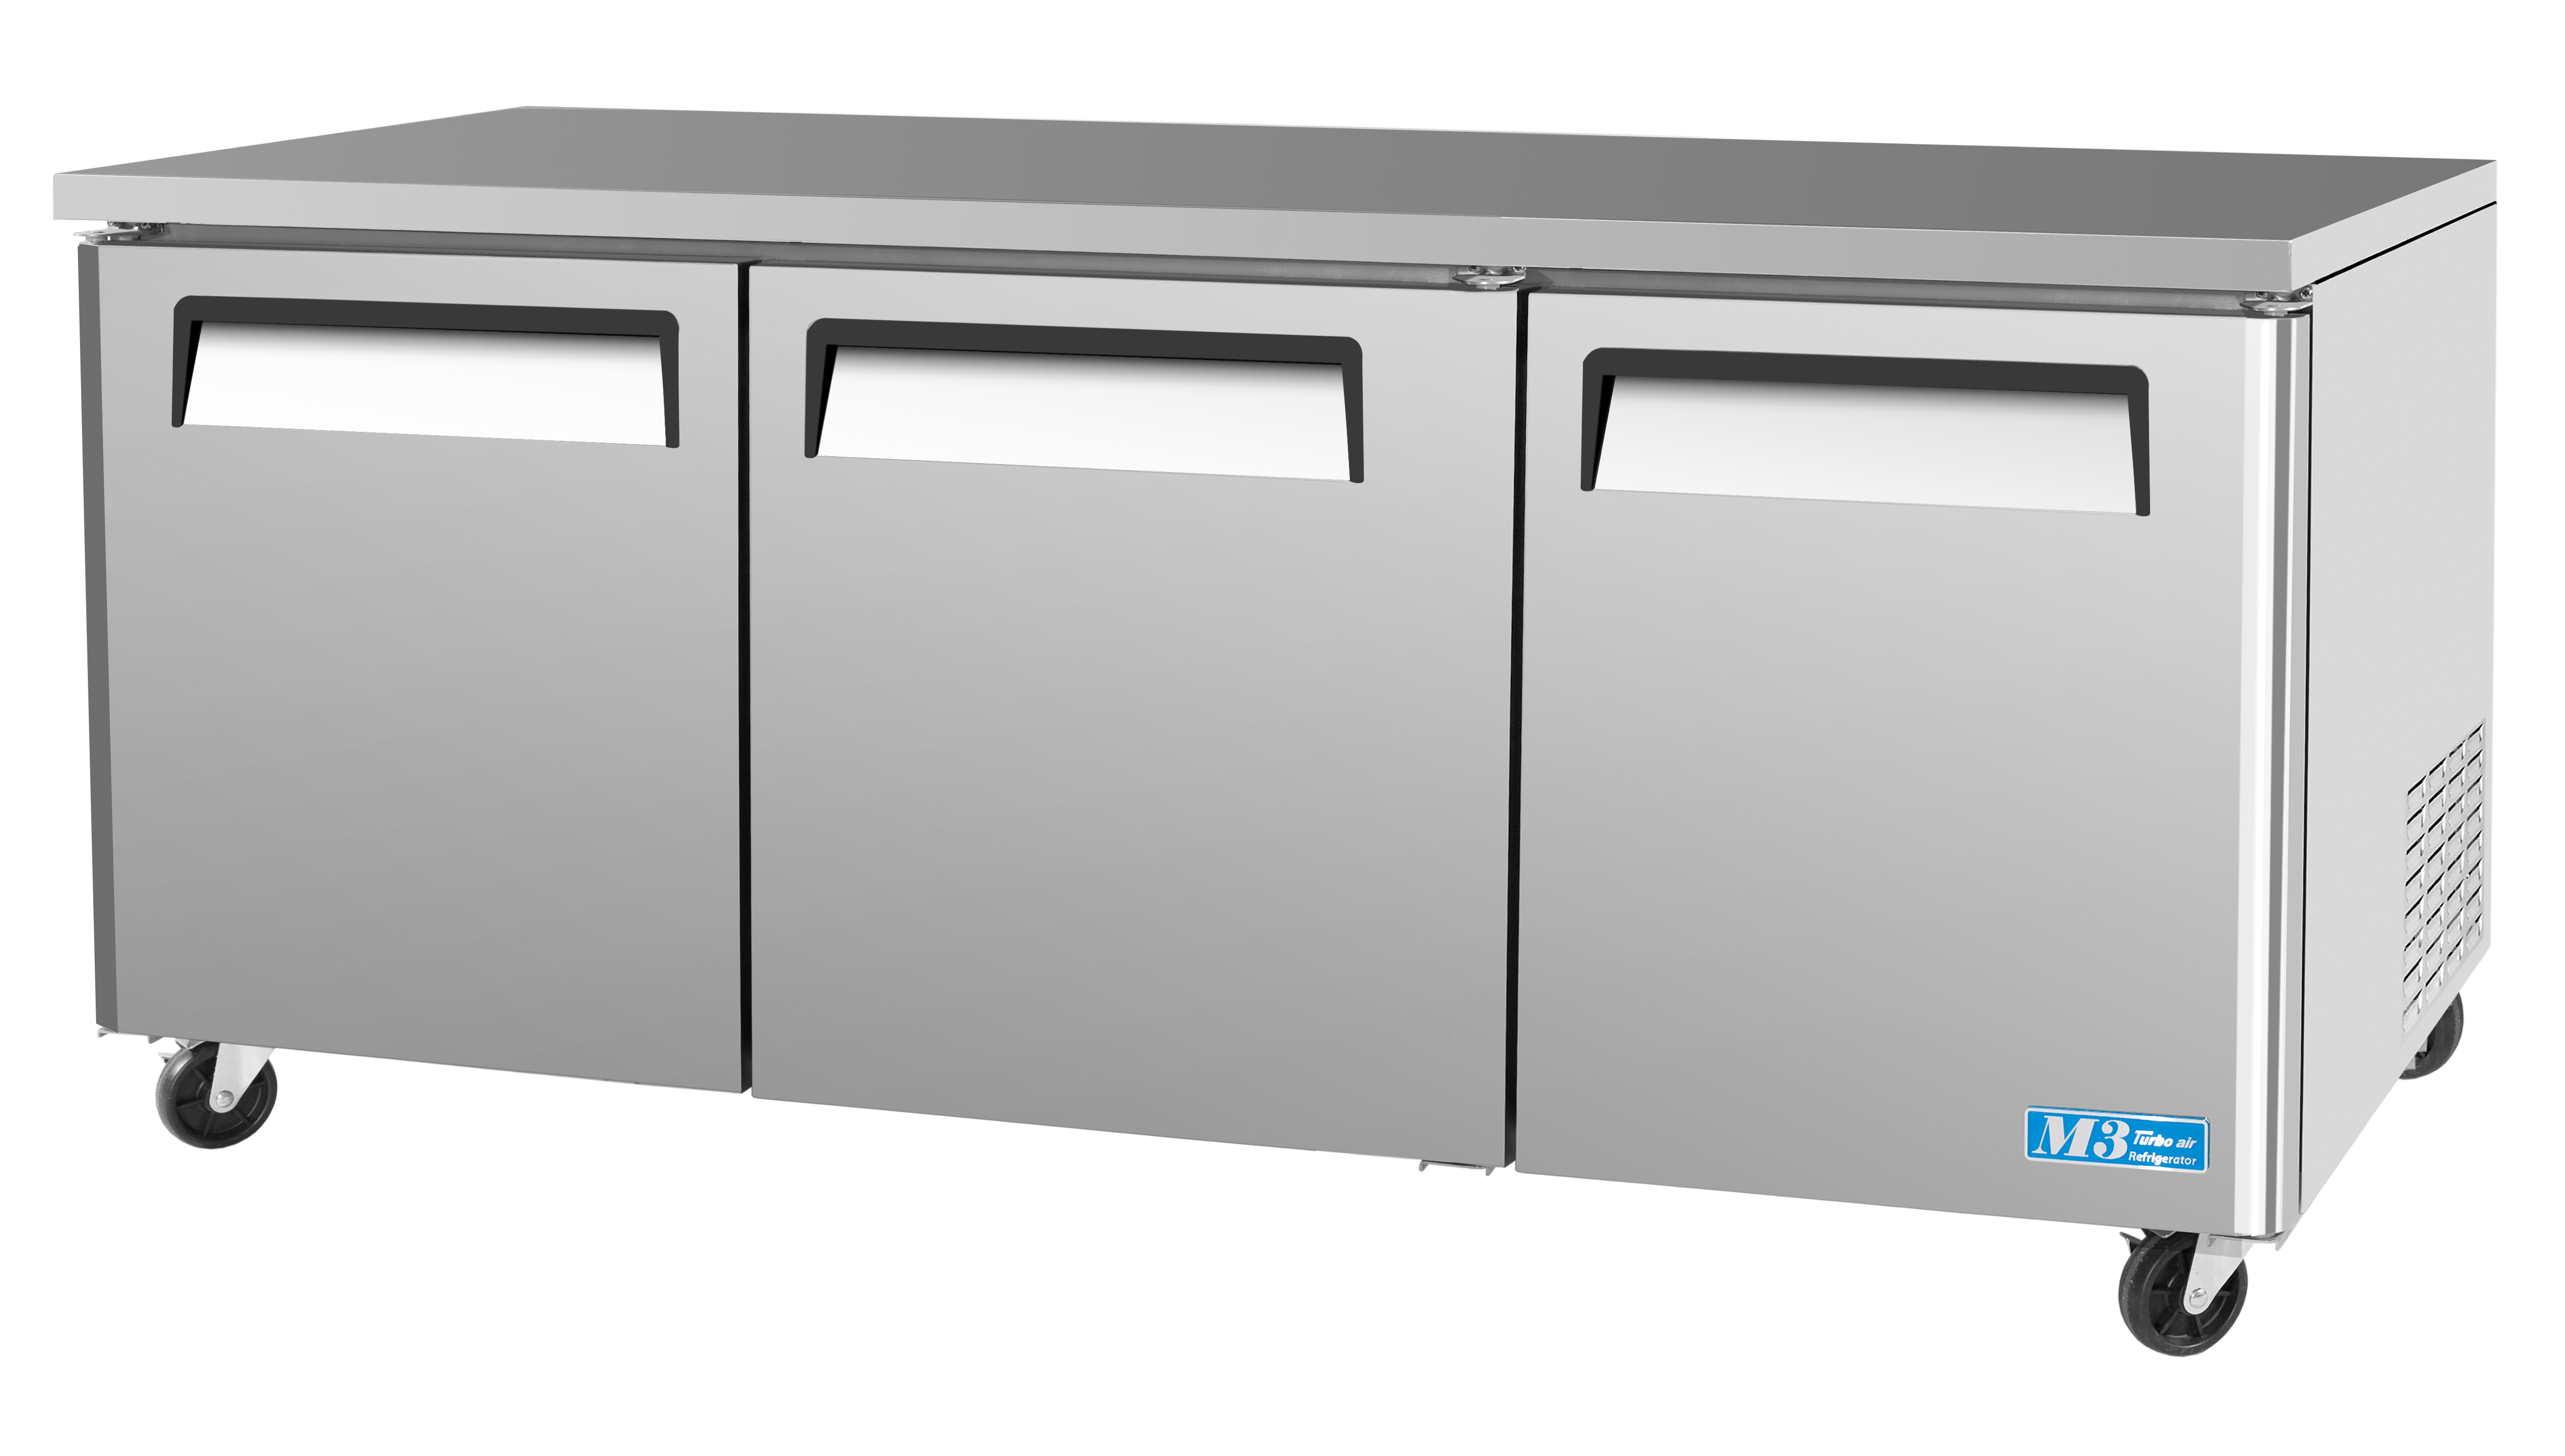 M3 Series Undercounter Refrigerator, 19 cu. ft